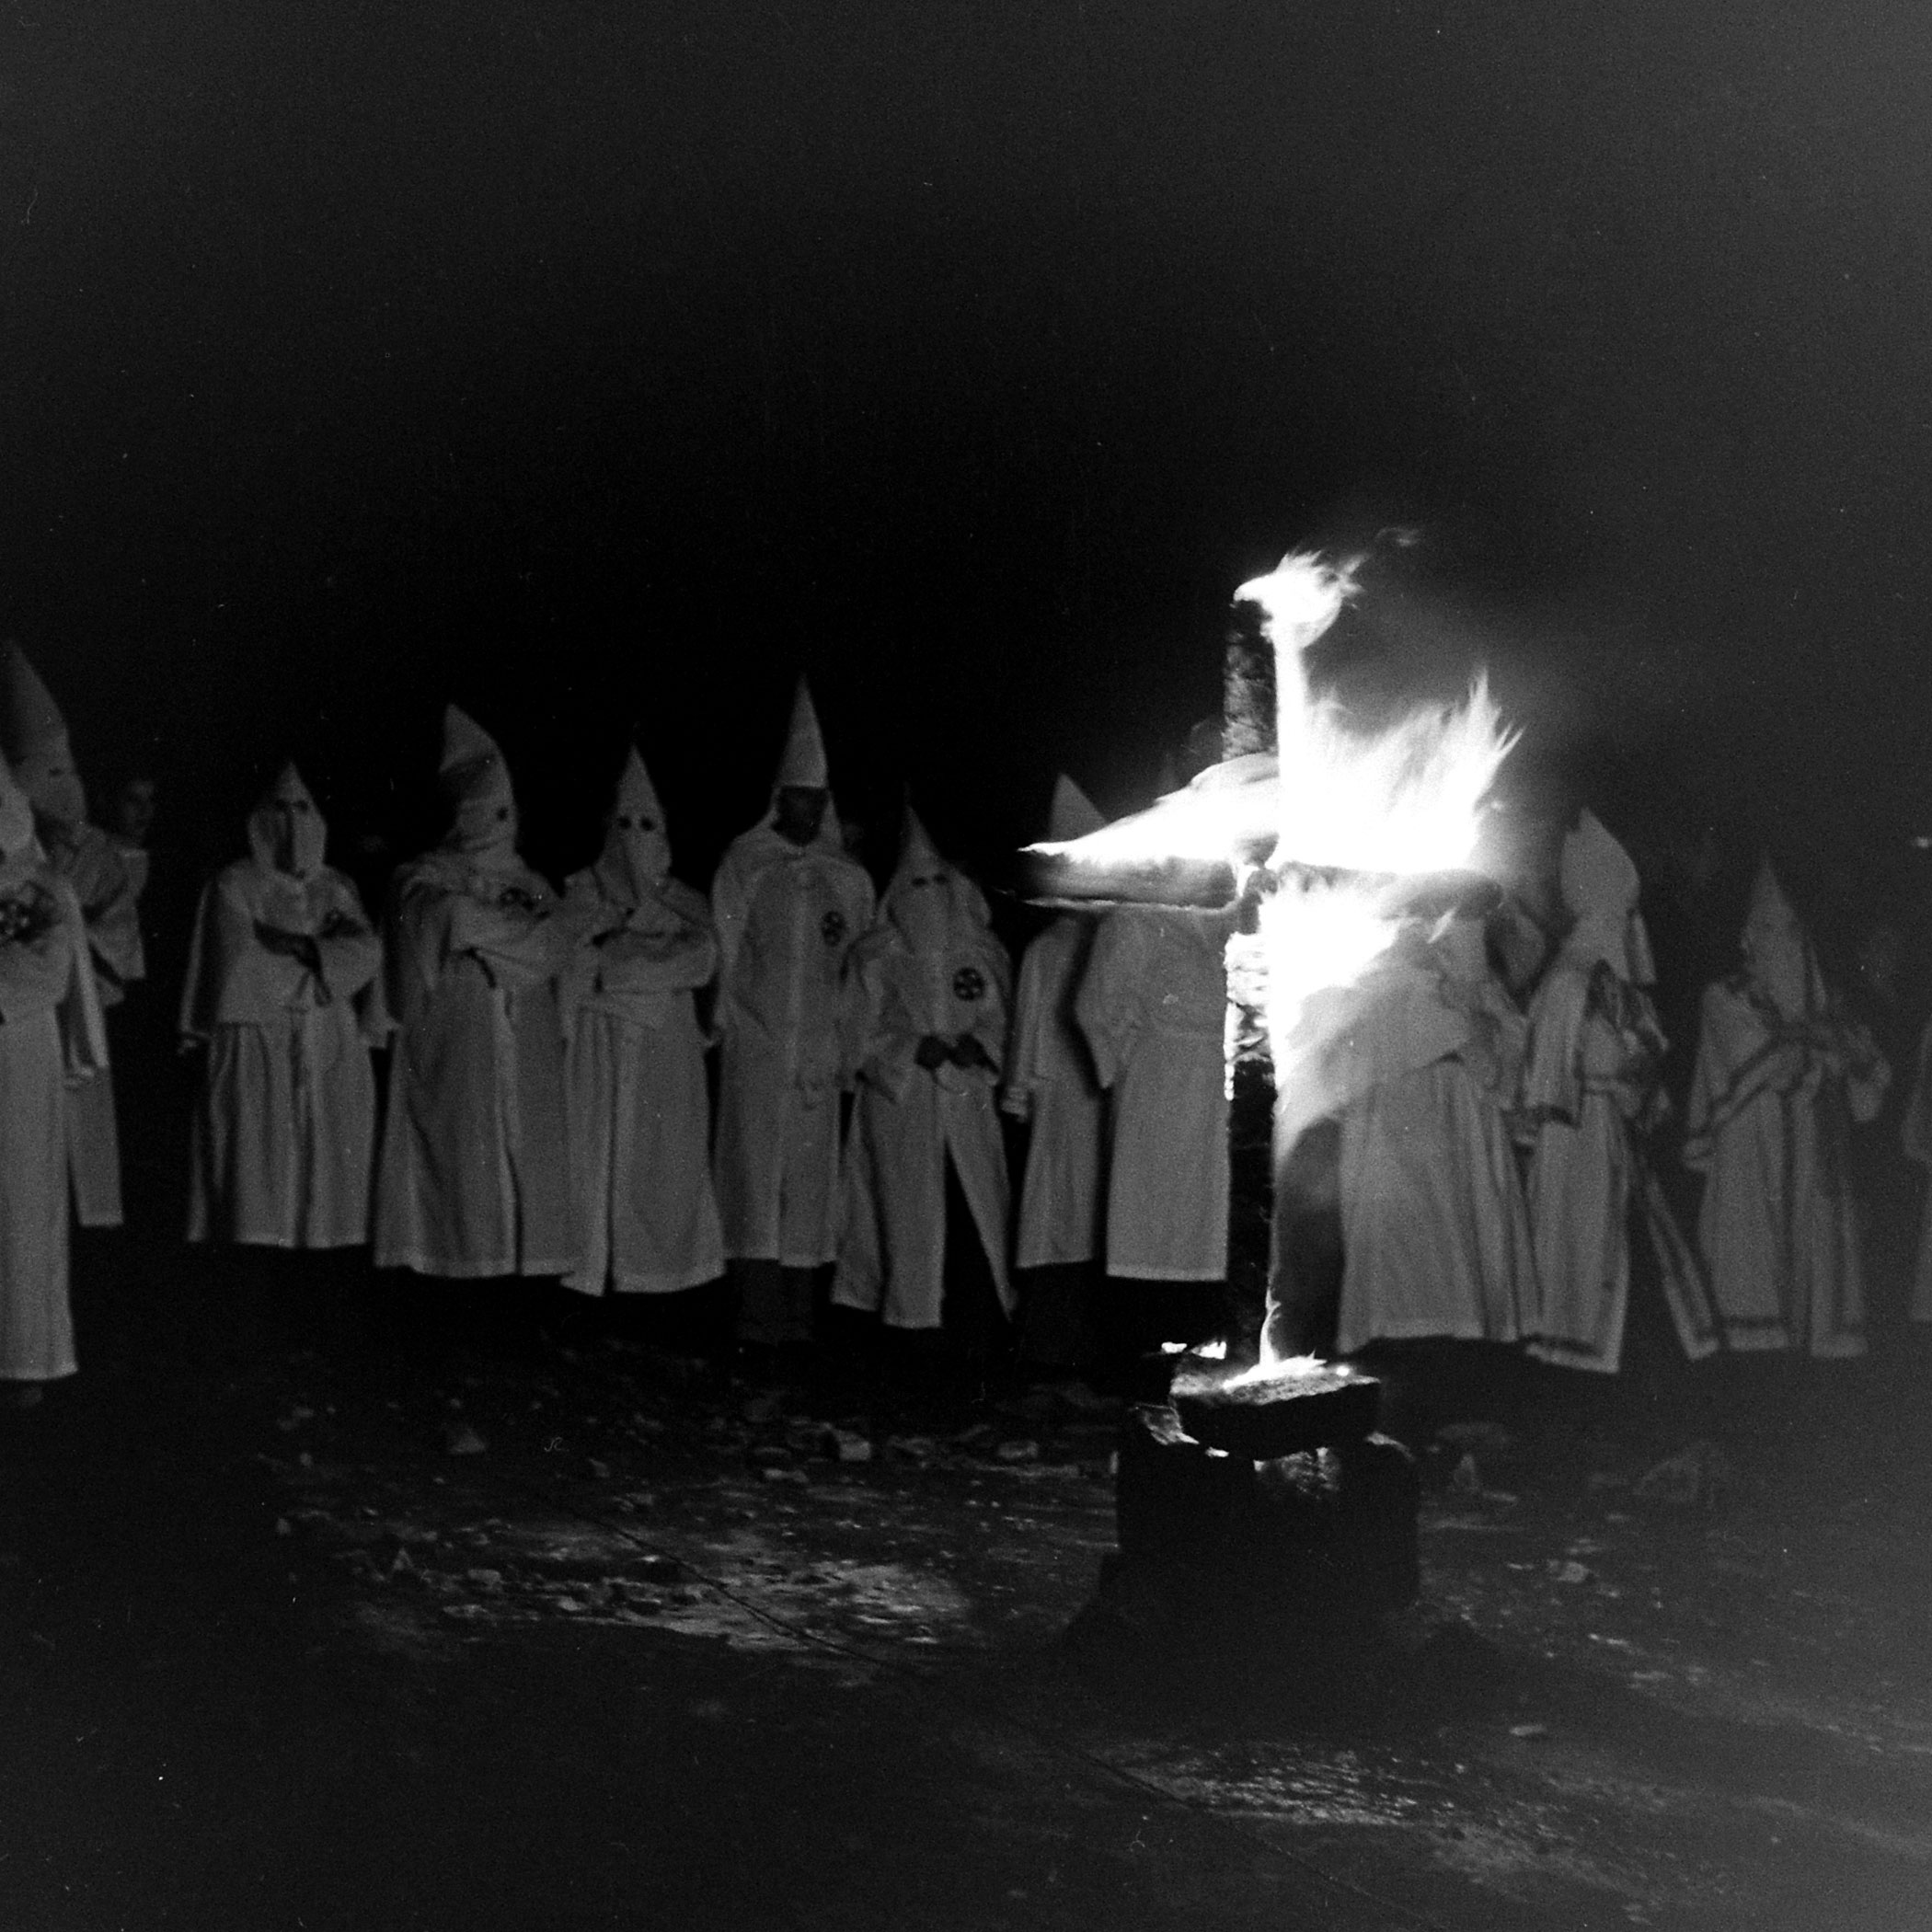 The scene at a Ku Klux Klan initiation ritual in Georgia, May 1946.